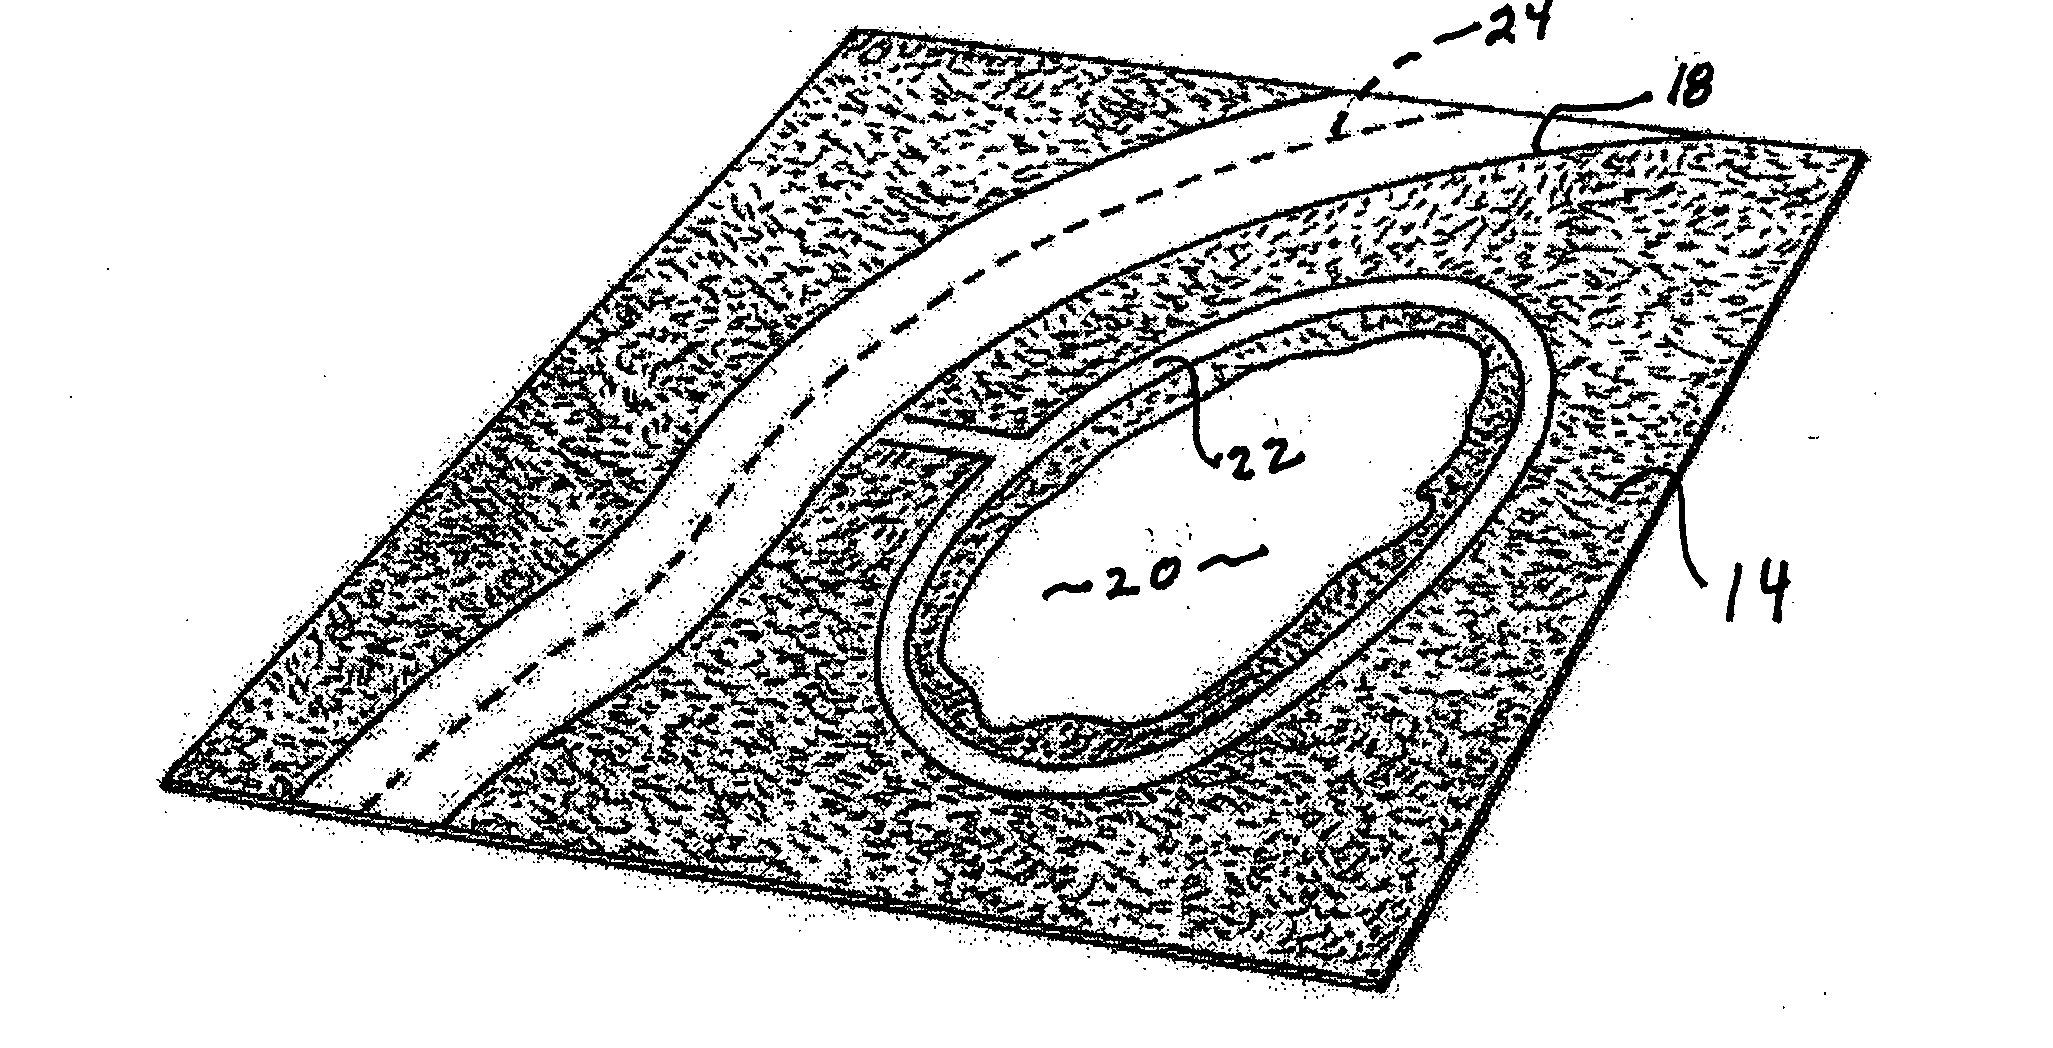 Simulated turf and method of making same